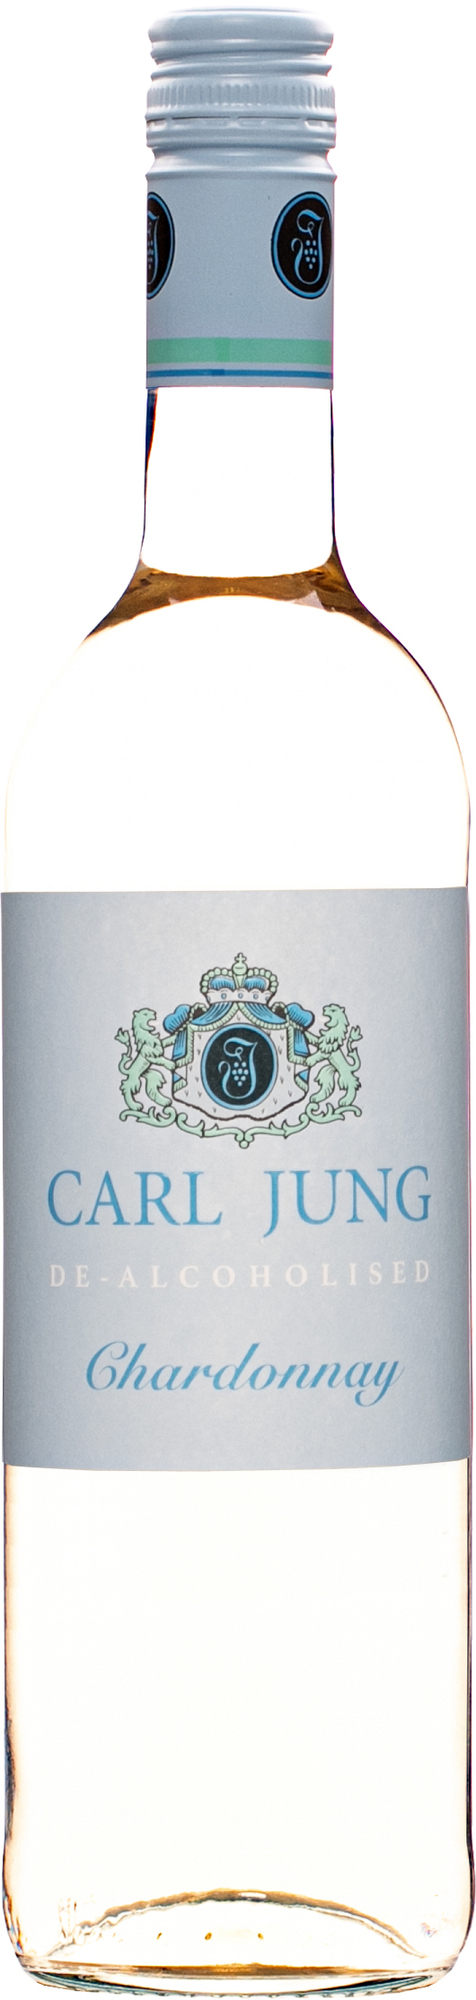 Carl Jung Chardonnay - Non-alcoholic wine | Bondston